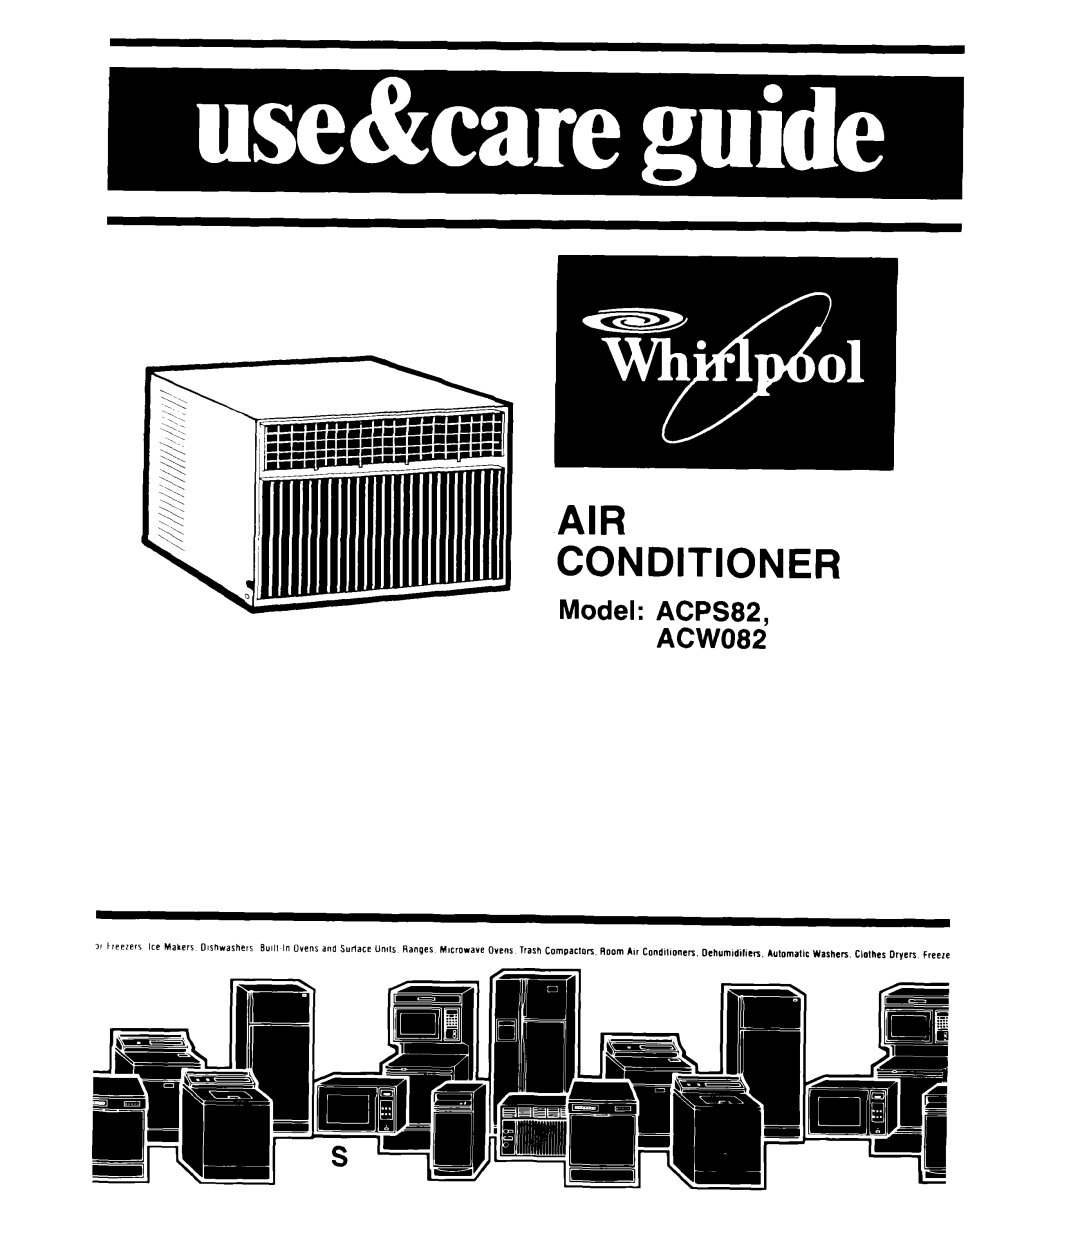 Whirlpool manual Air Conditioner, Model ACPS82, ACW082 